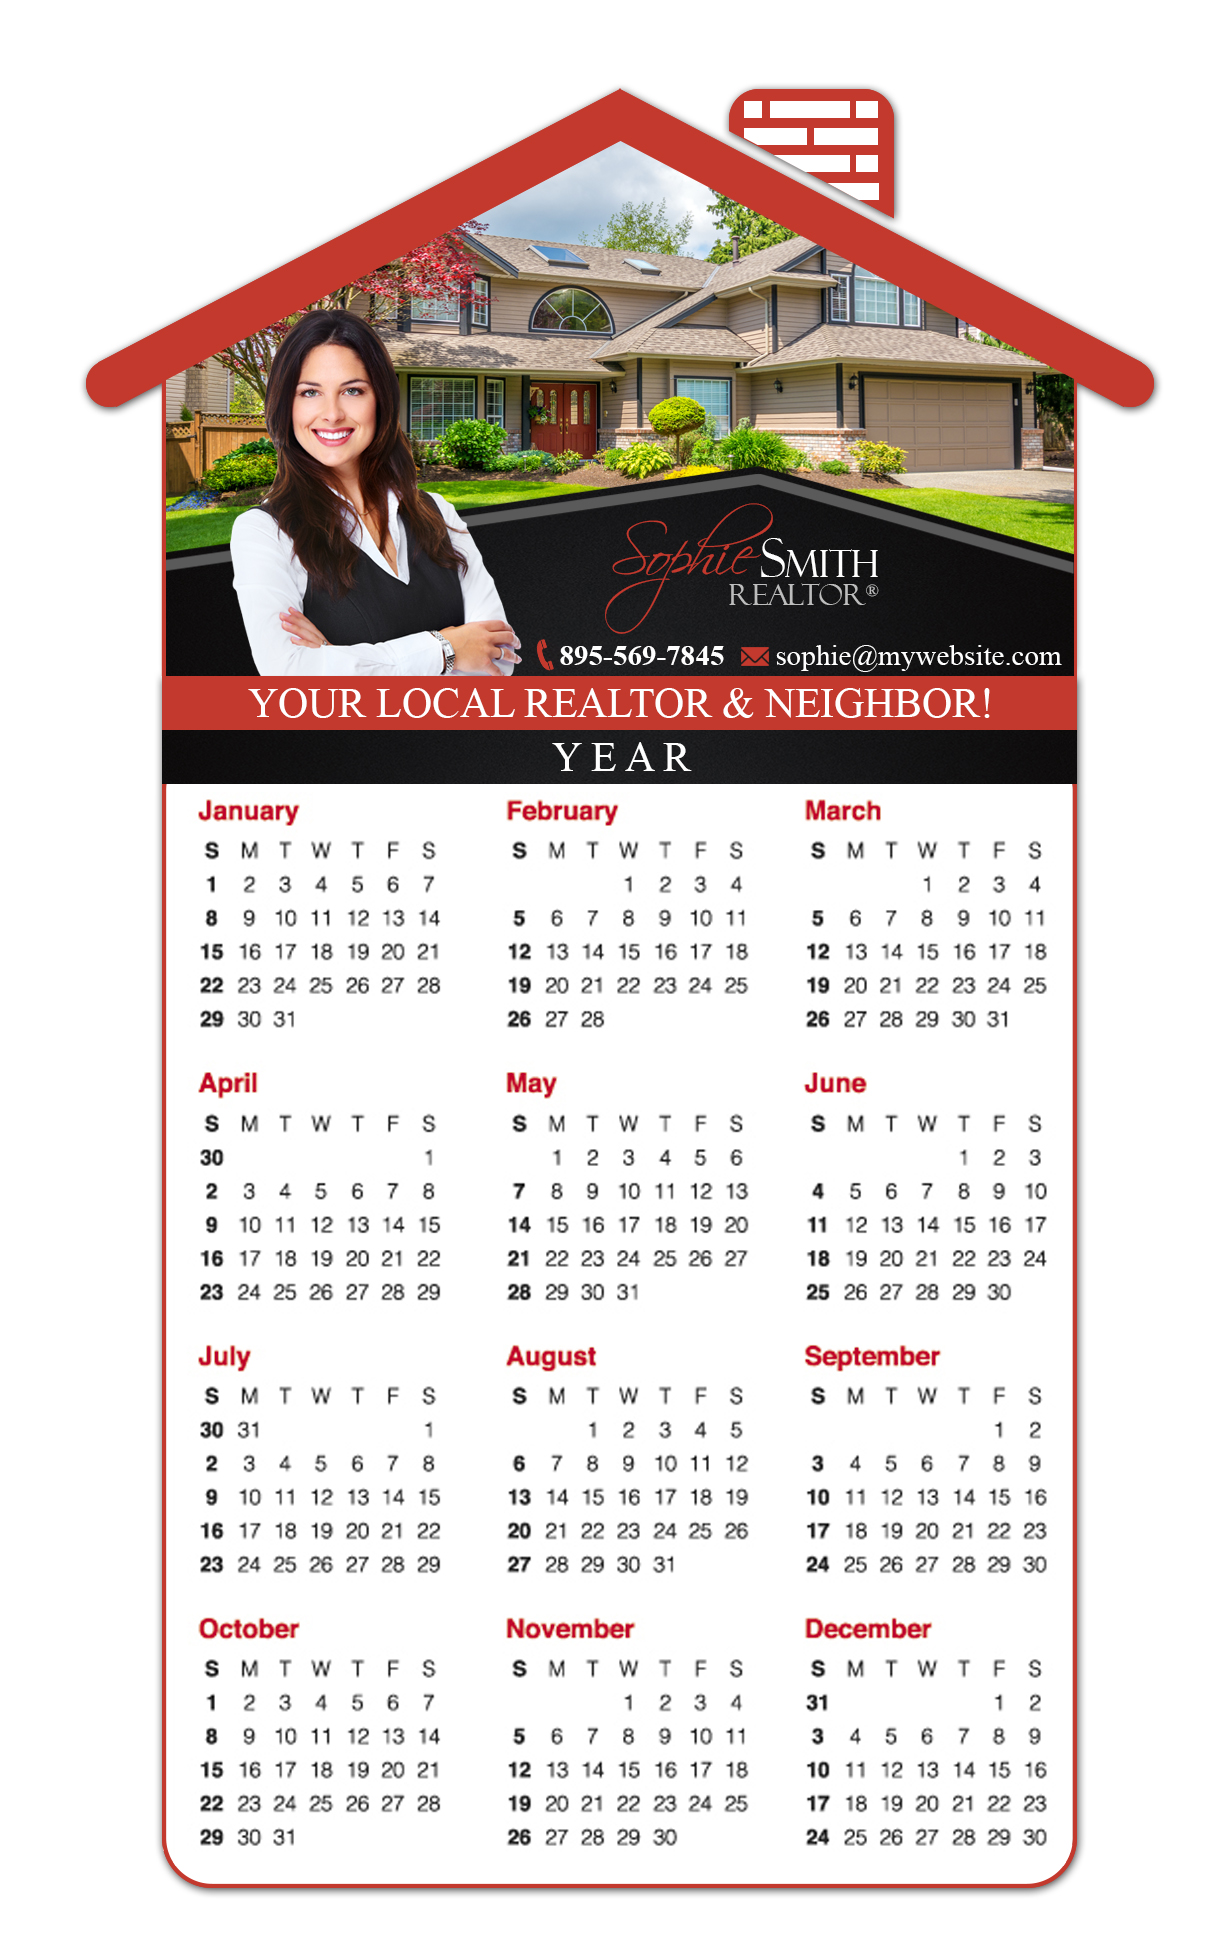 Real Estate Calendars | Real Estate Calendar Magnets, Real Estate Magnetic Calendars, Real Estate Promotional Calendars, Real Estate Refrigerator Magnets